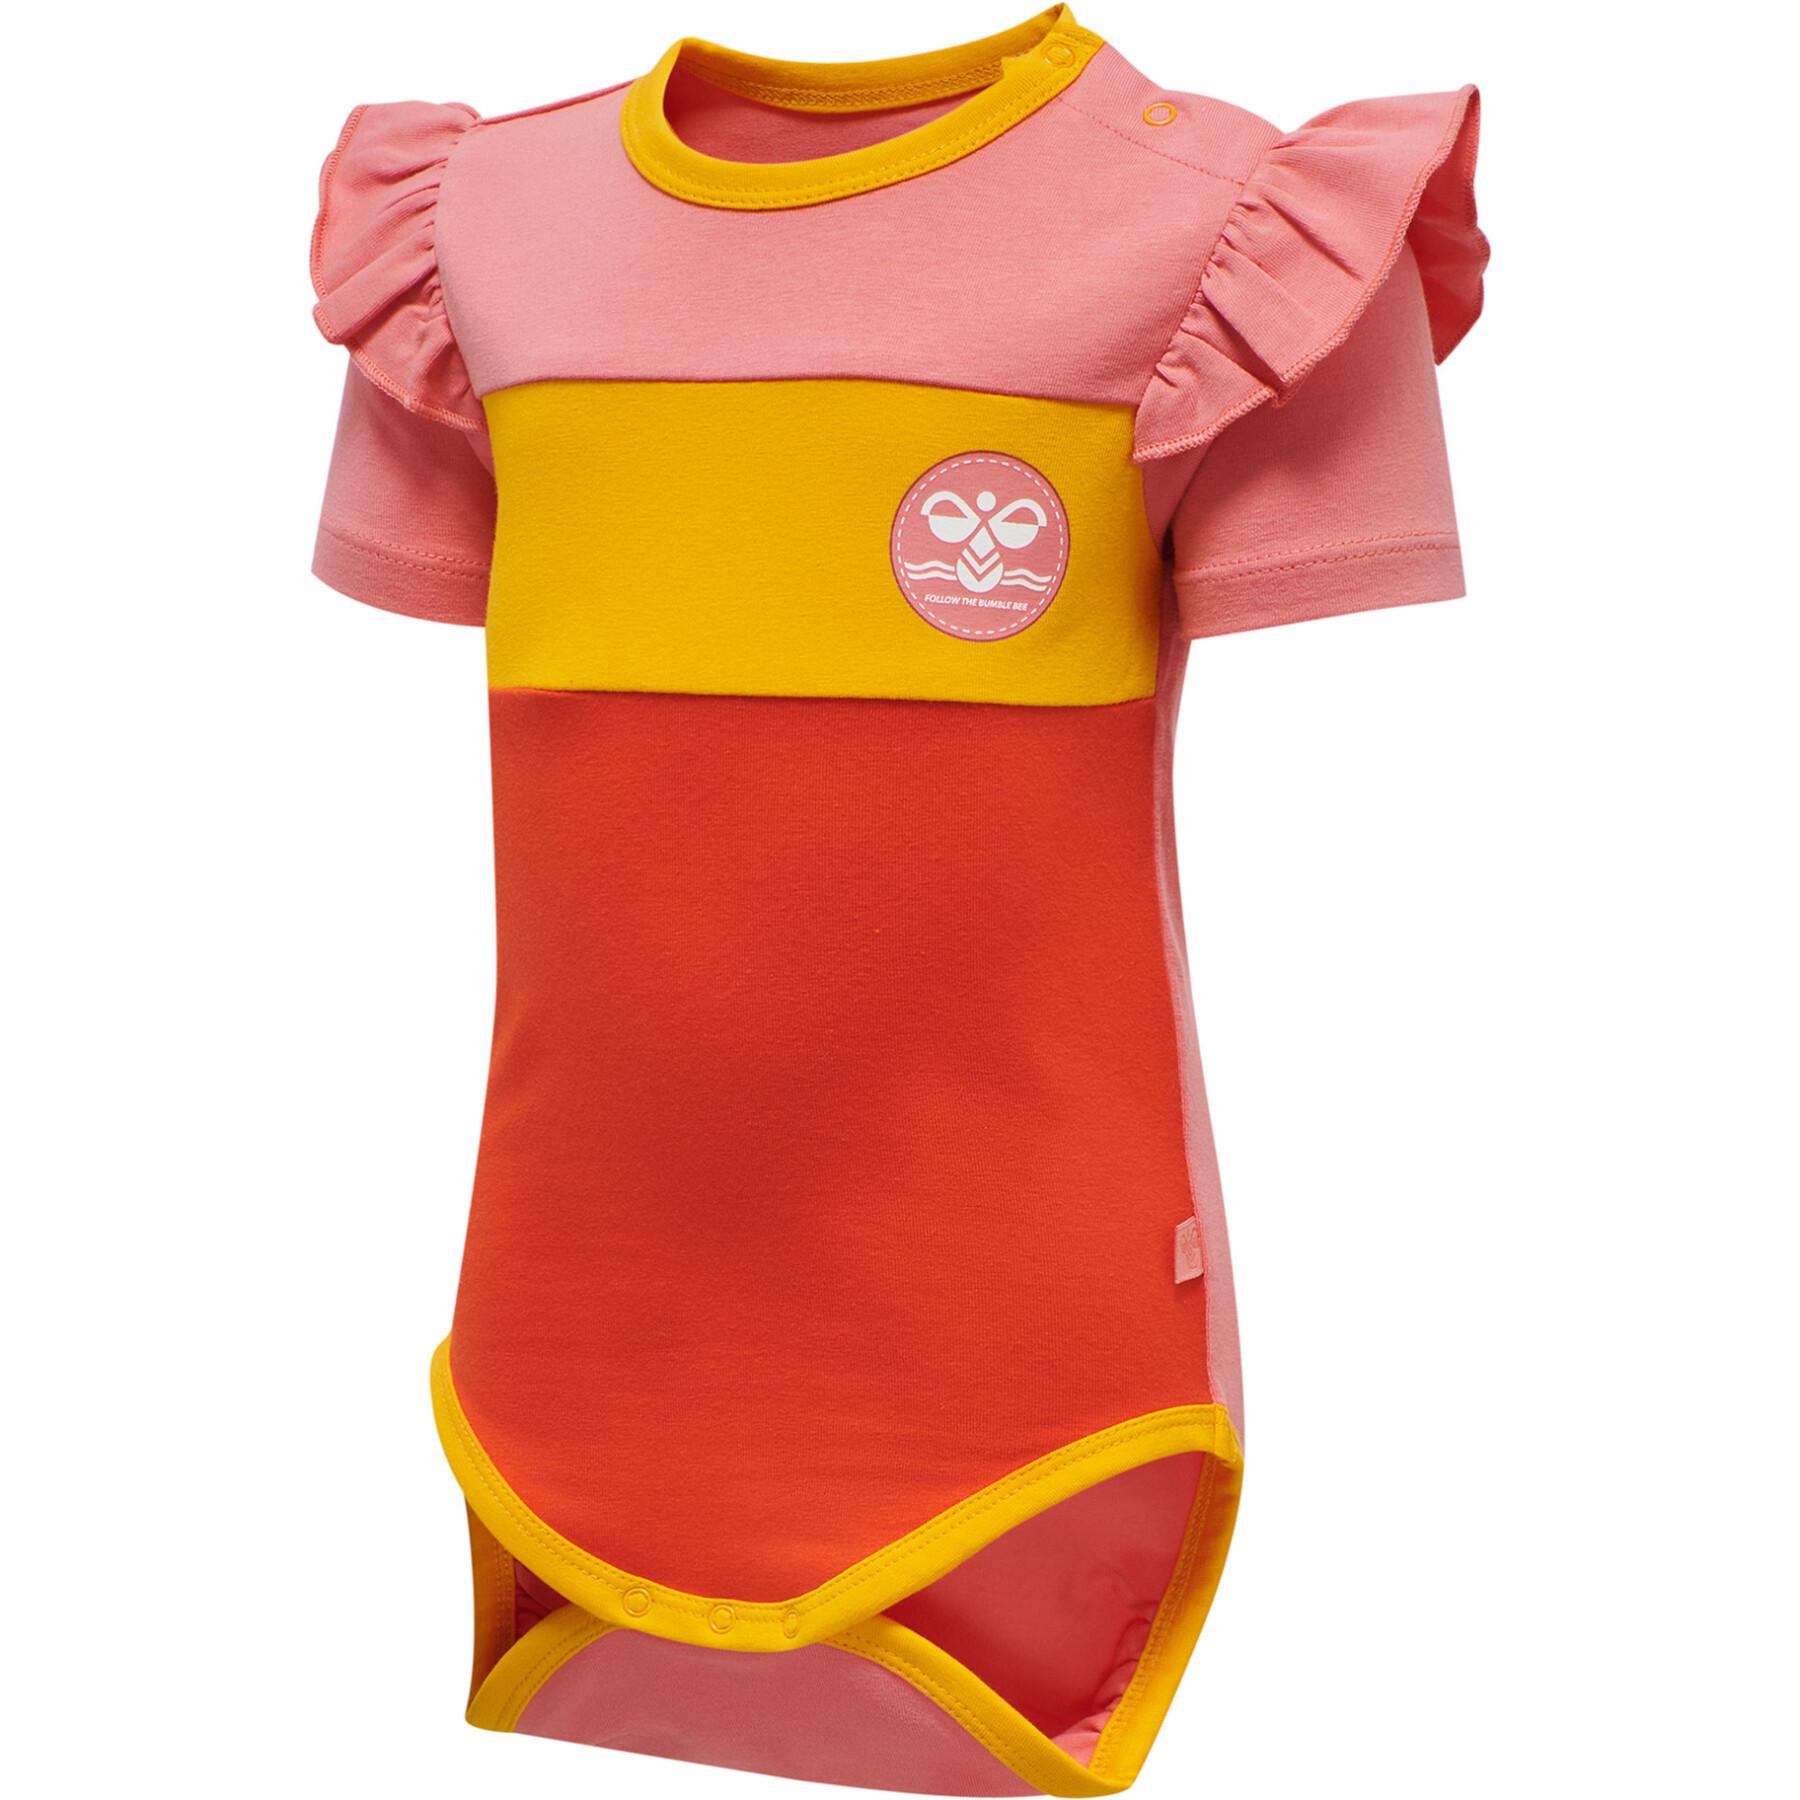 Baby bodysuit Hummel Anni